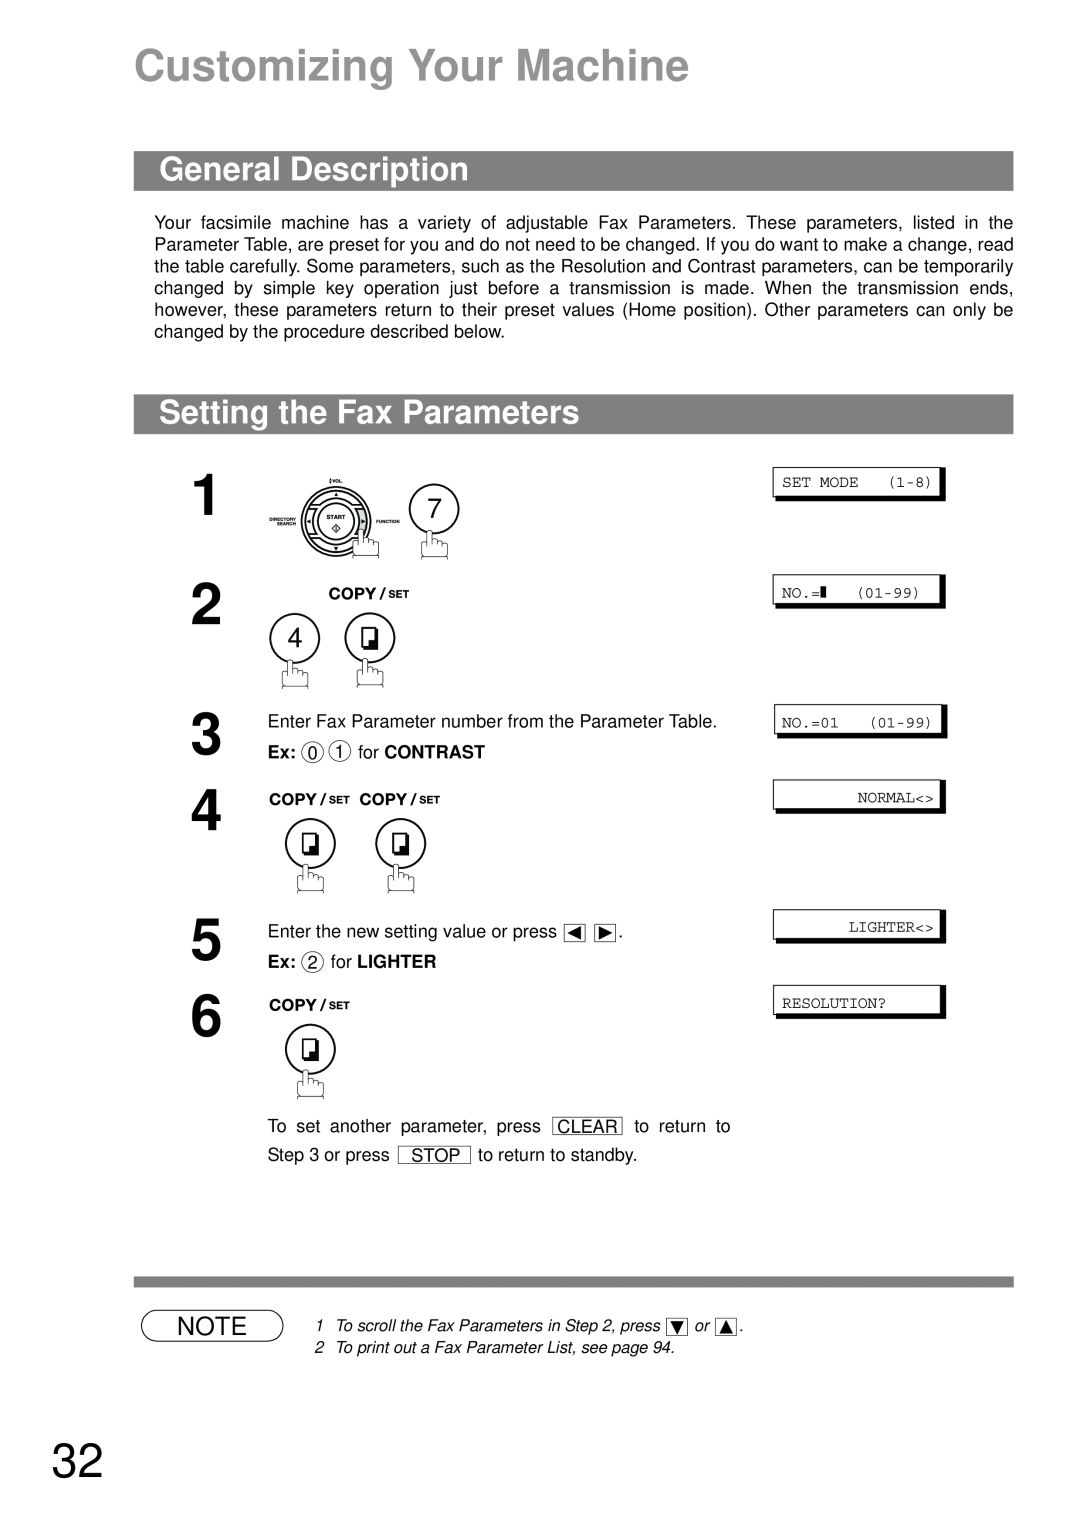 Castelle UF-490 appendix Customizing Your Machine, Setting the Fax Parameters, General Description, Ex 0 1 for CONTRAST 